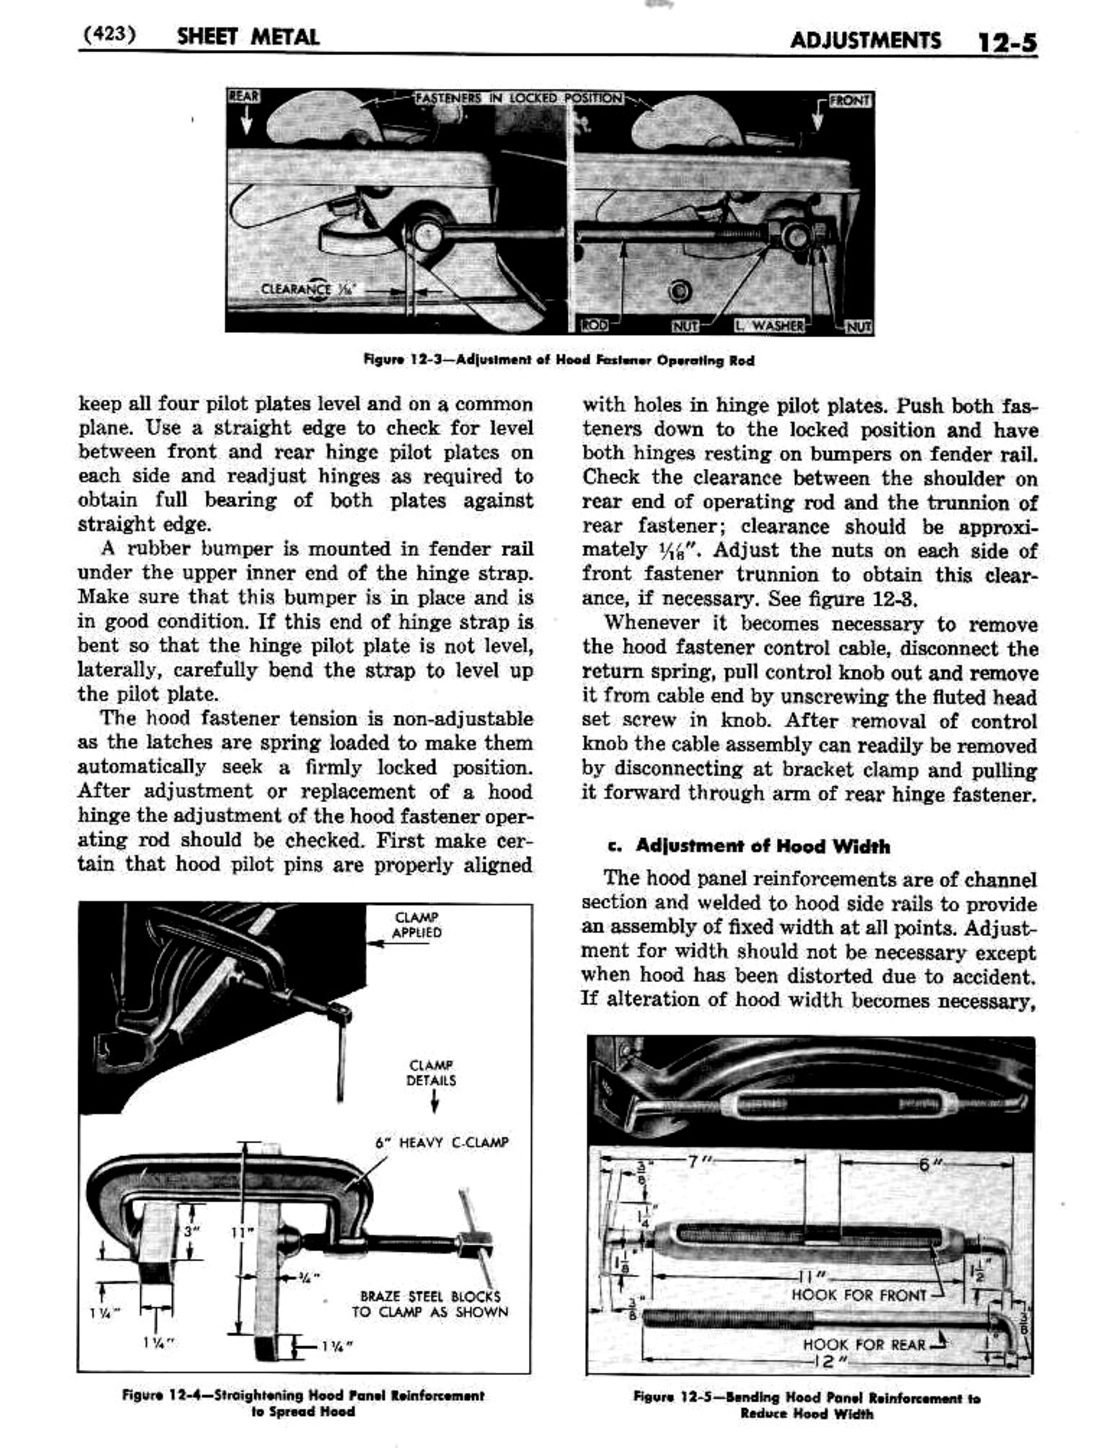 n_13 1951 Buick Shop Manual - Sheet Metal-005-005.jpg